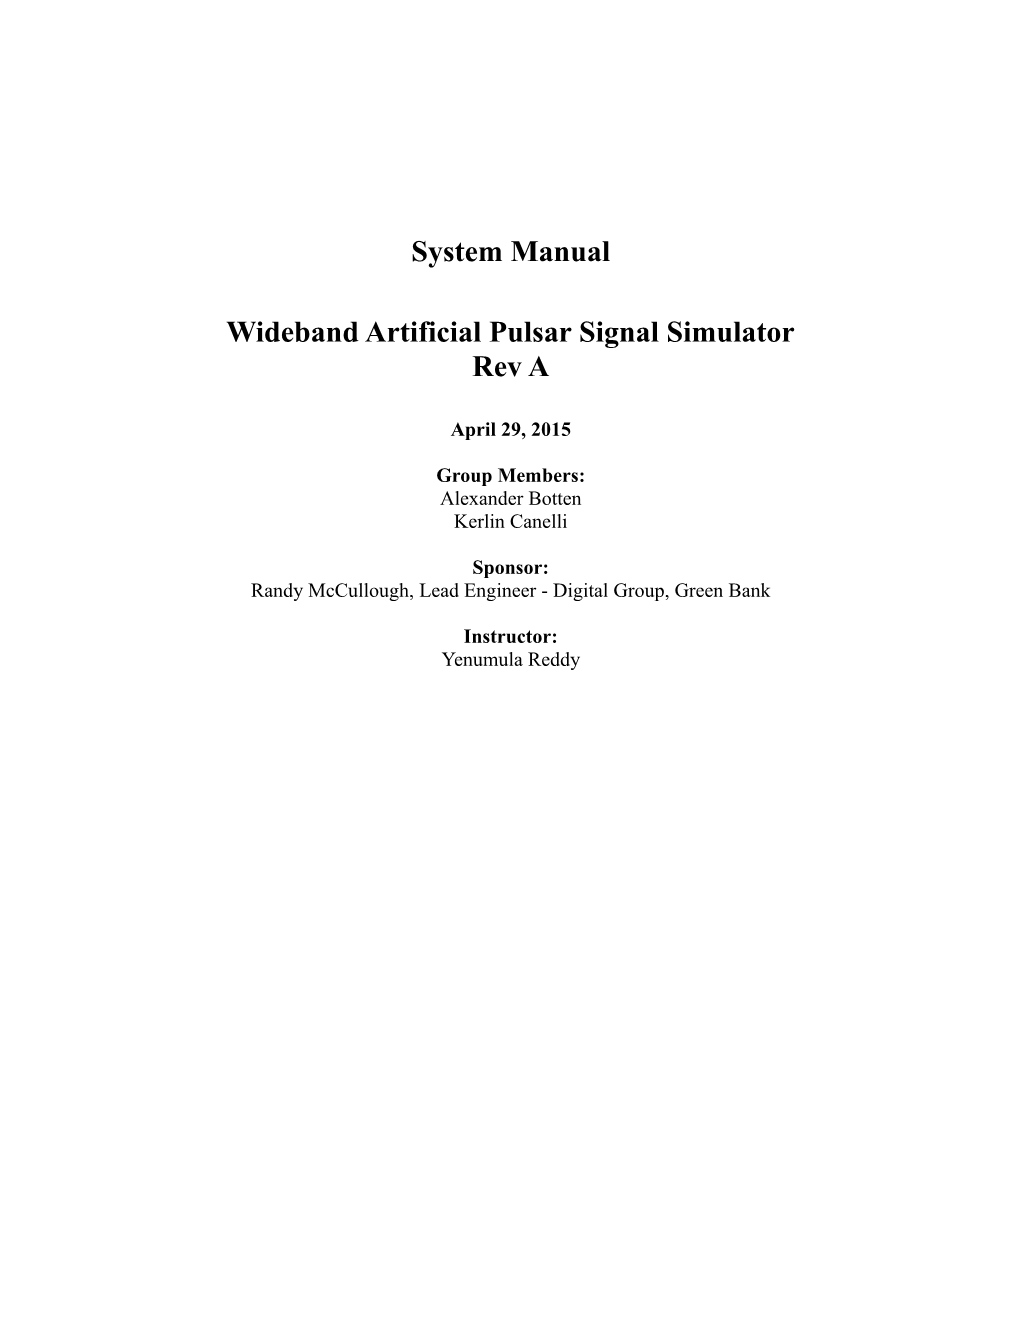 Wideband Artificial Pulsar Signal Simulator